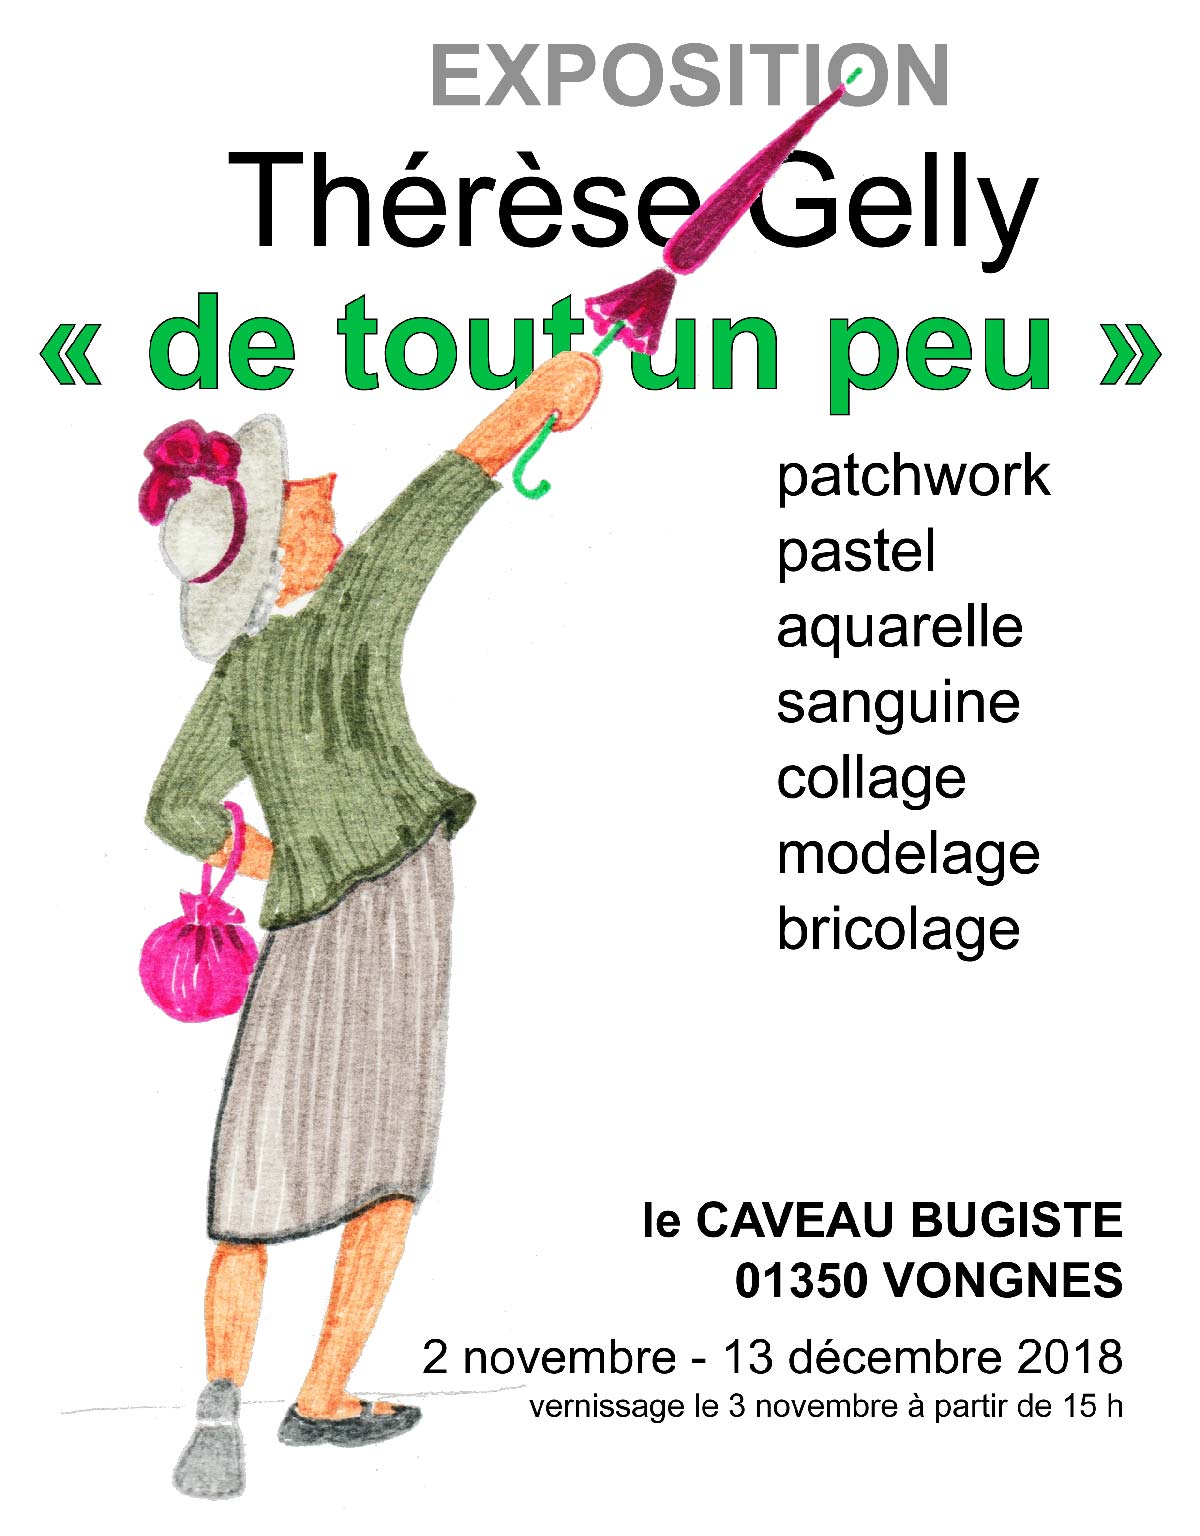 Exposition de Thérèse Gelly